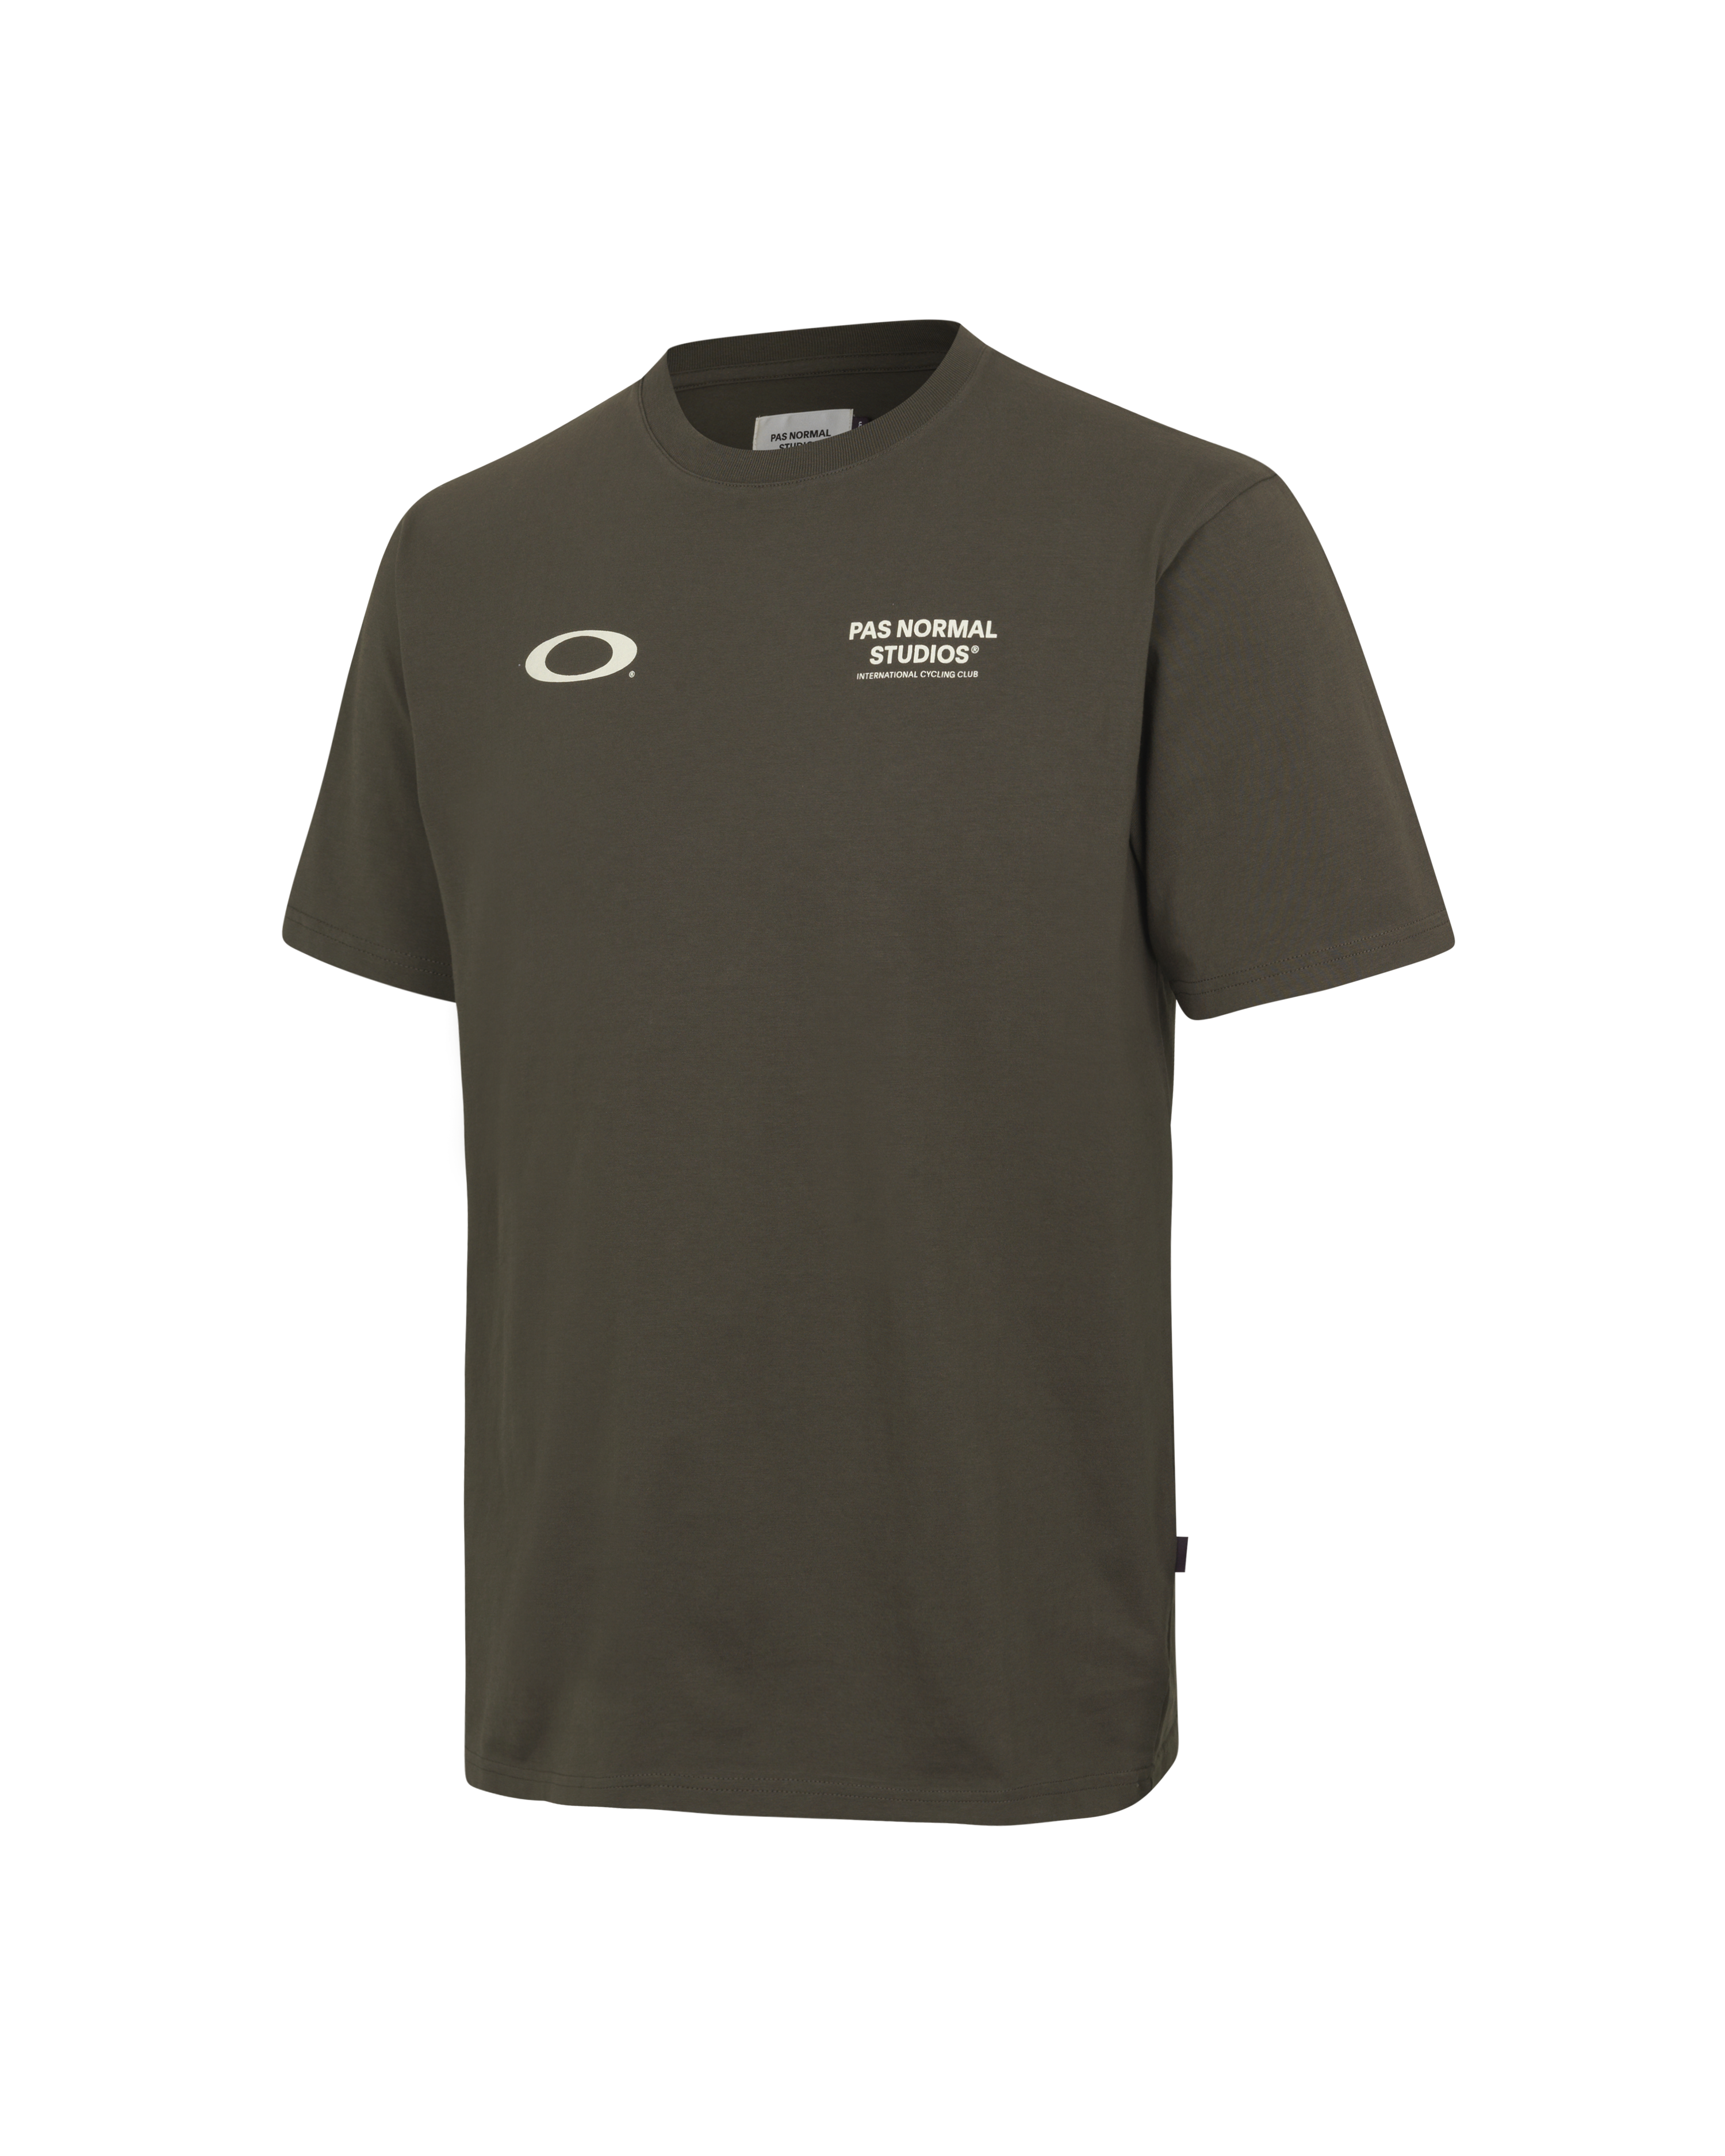 Oakley x Pas Normal Studios Off-Race T-Shirt - Black Olive